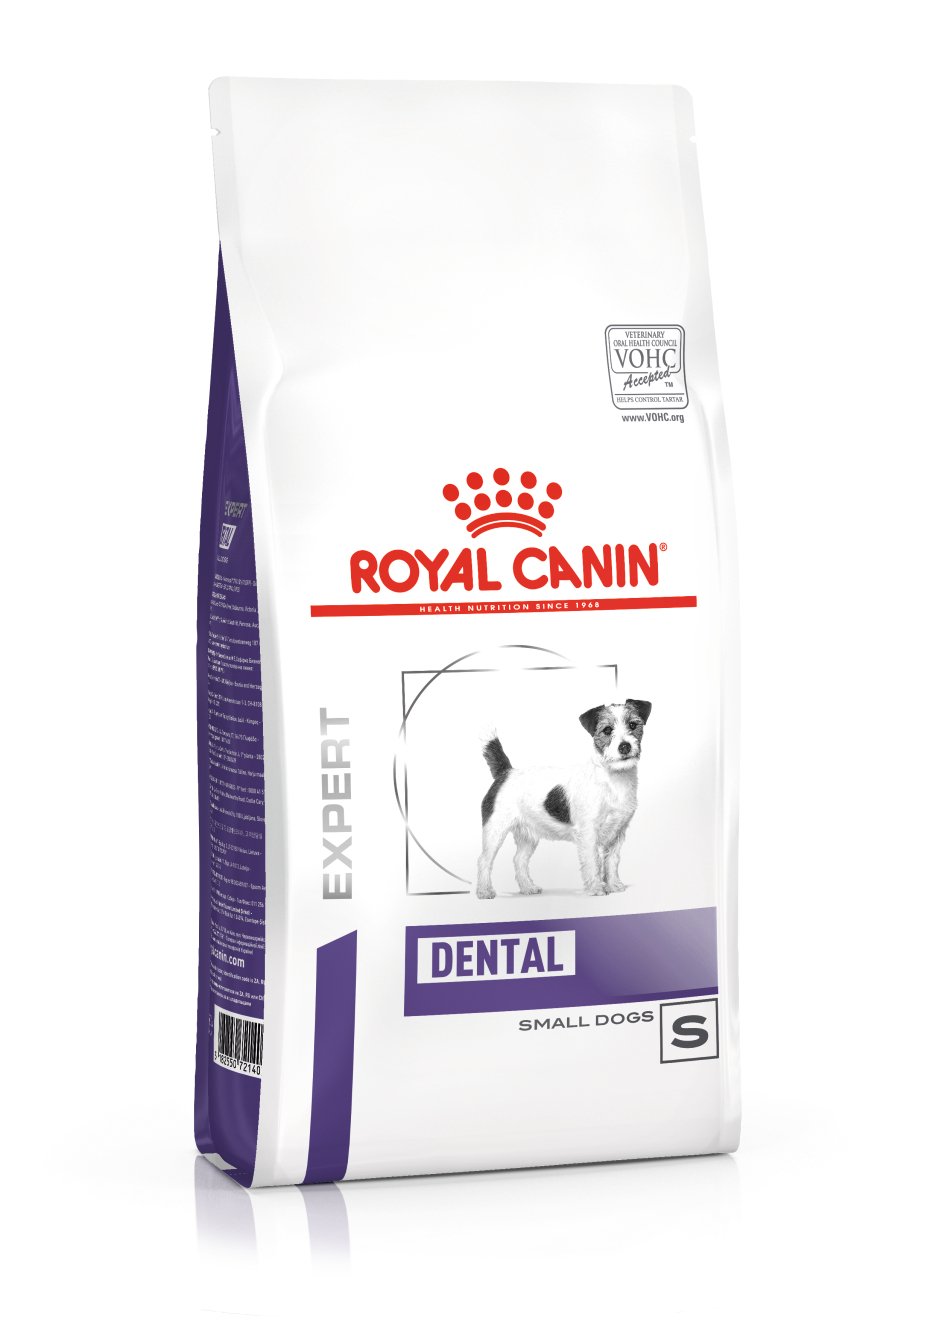 Royal Canin Expert Dental Small Dogs para perros pequeños